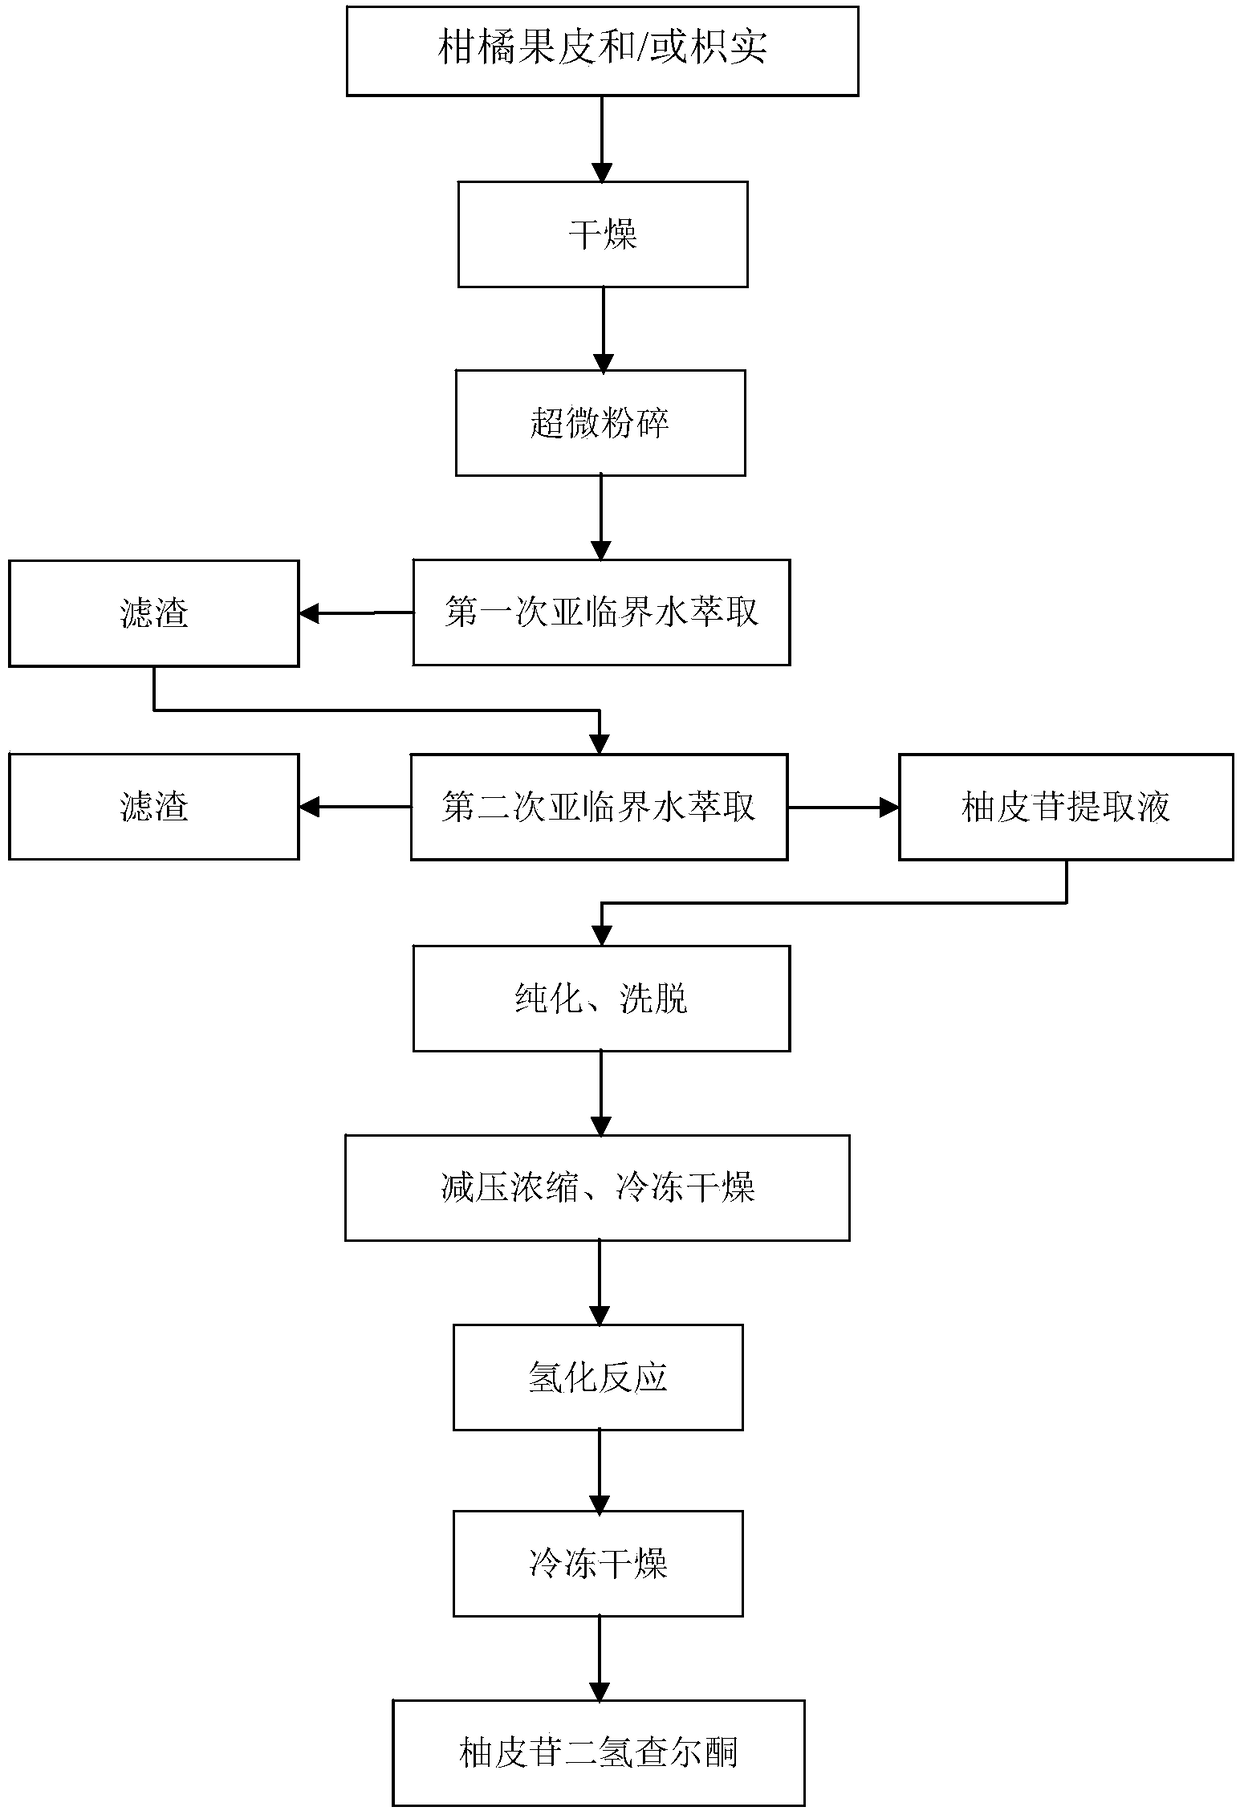 Preparation method of naringin dihydrochlcone